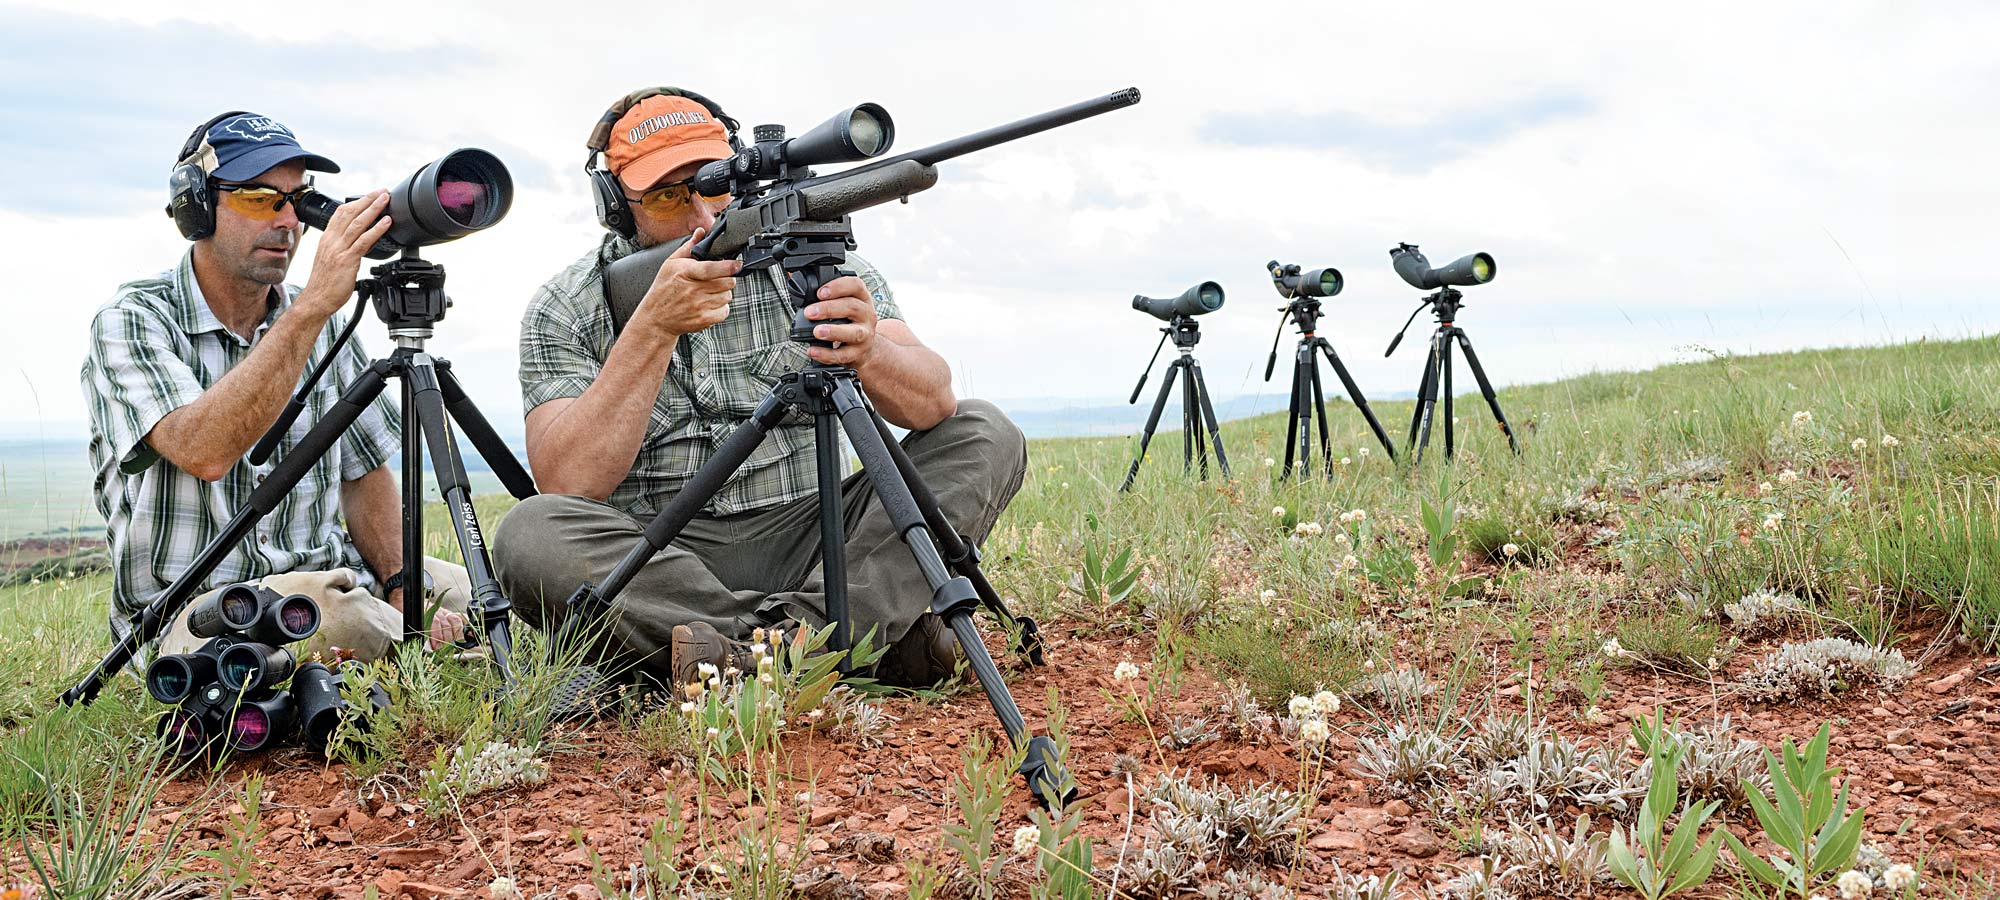 two hunters testing optics scopes and binoculars